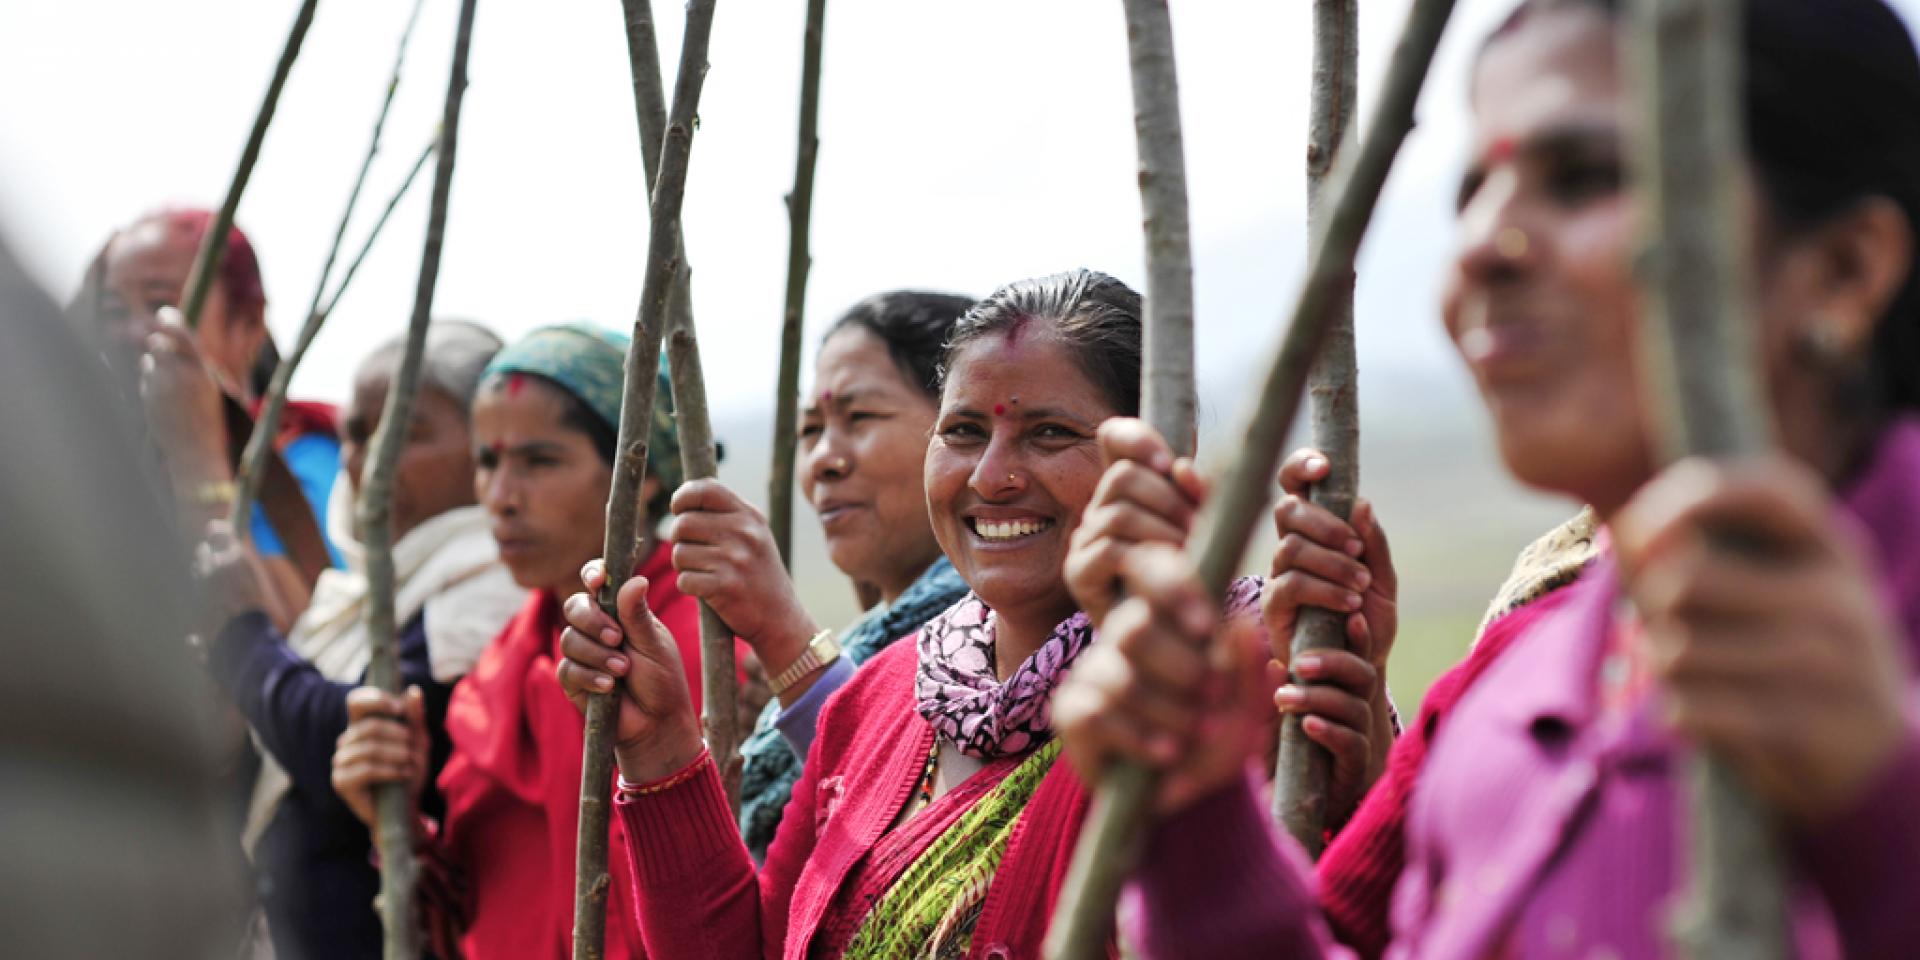 Women holding wood sticks